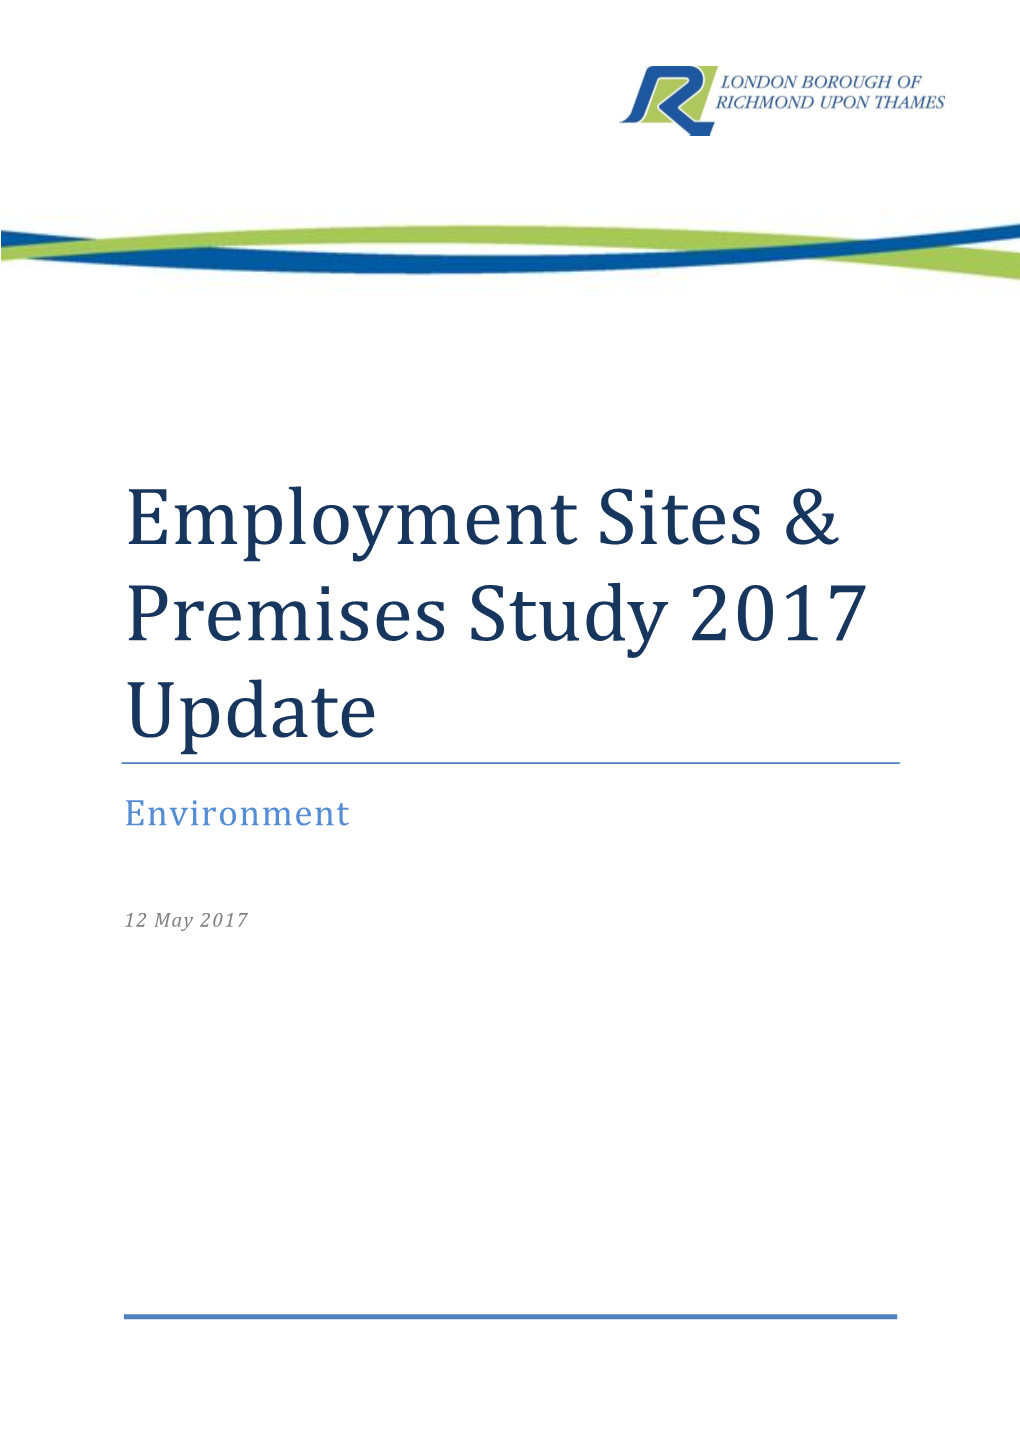 Employment Sites & Premises Study 2017 Update